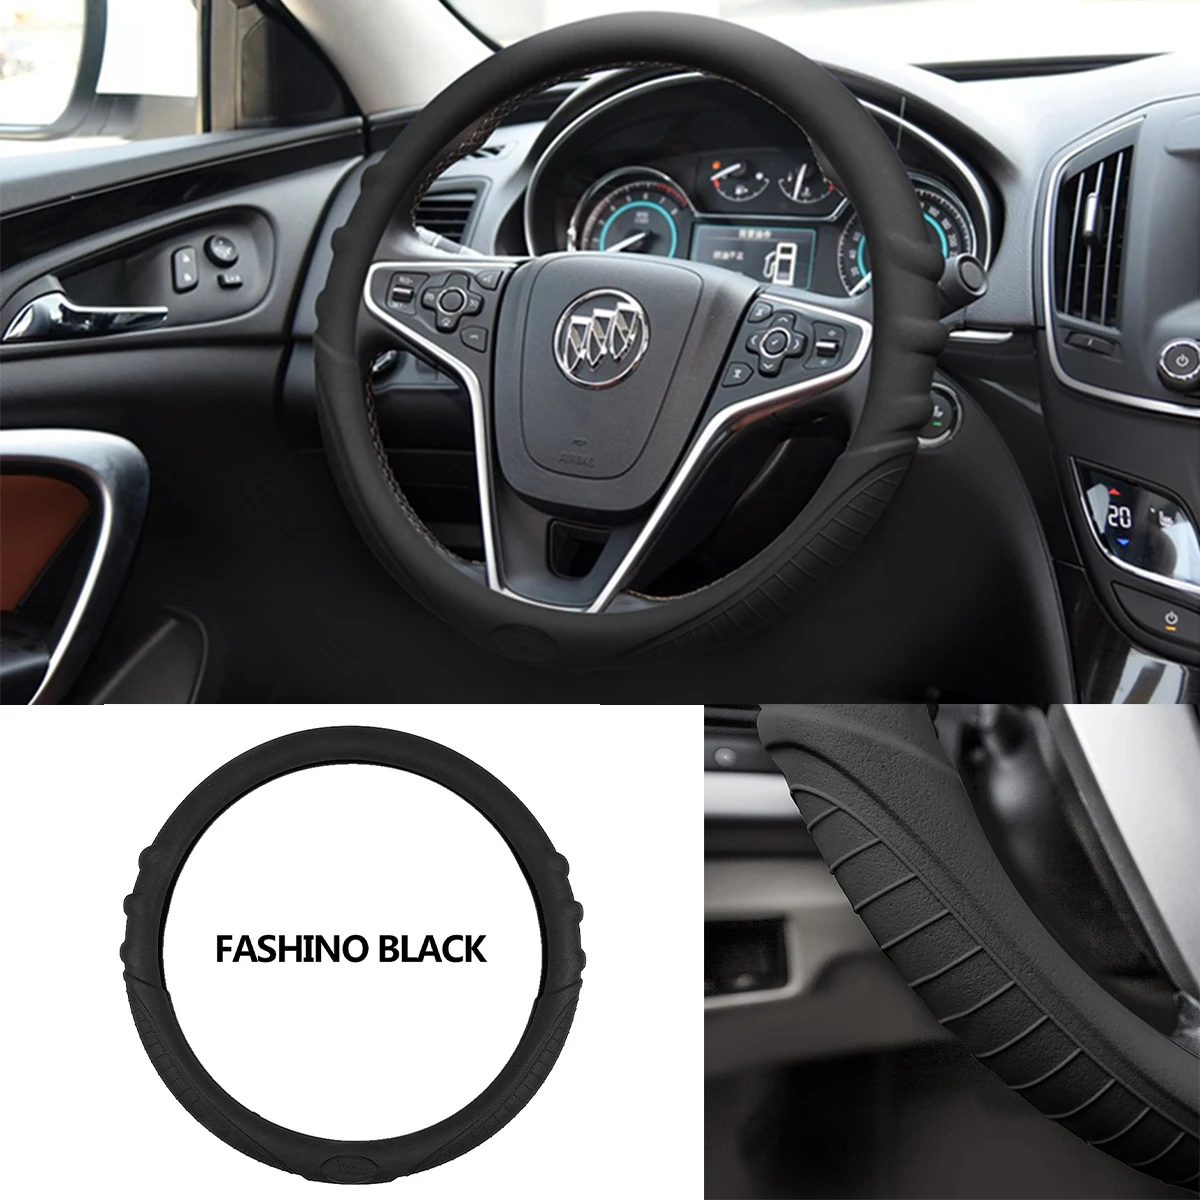 

Universal Fits Black Silicone Massaging Pattern Anti-slip Grip Steering Wheel Cover